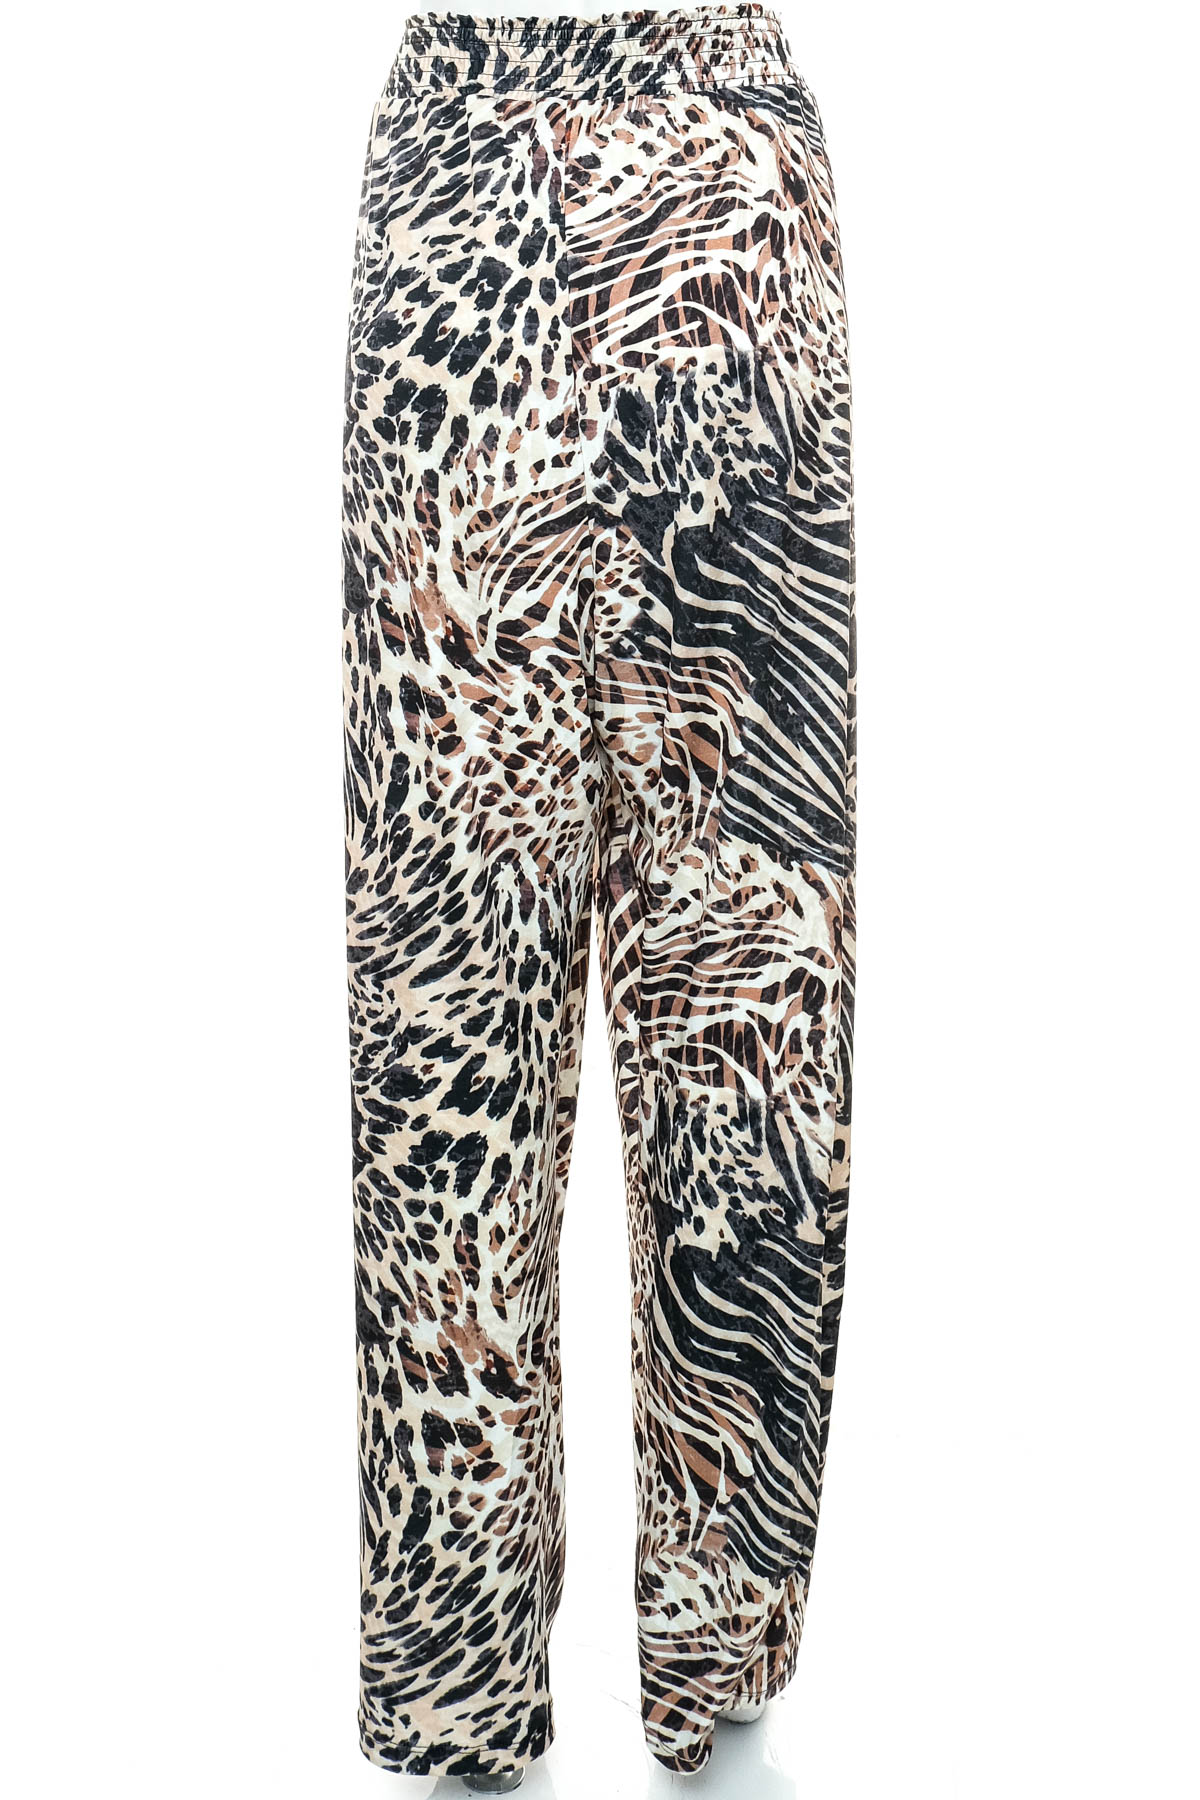 Women's trousers - Bpc selection bonprix collection - 1